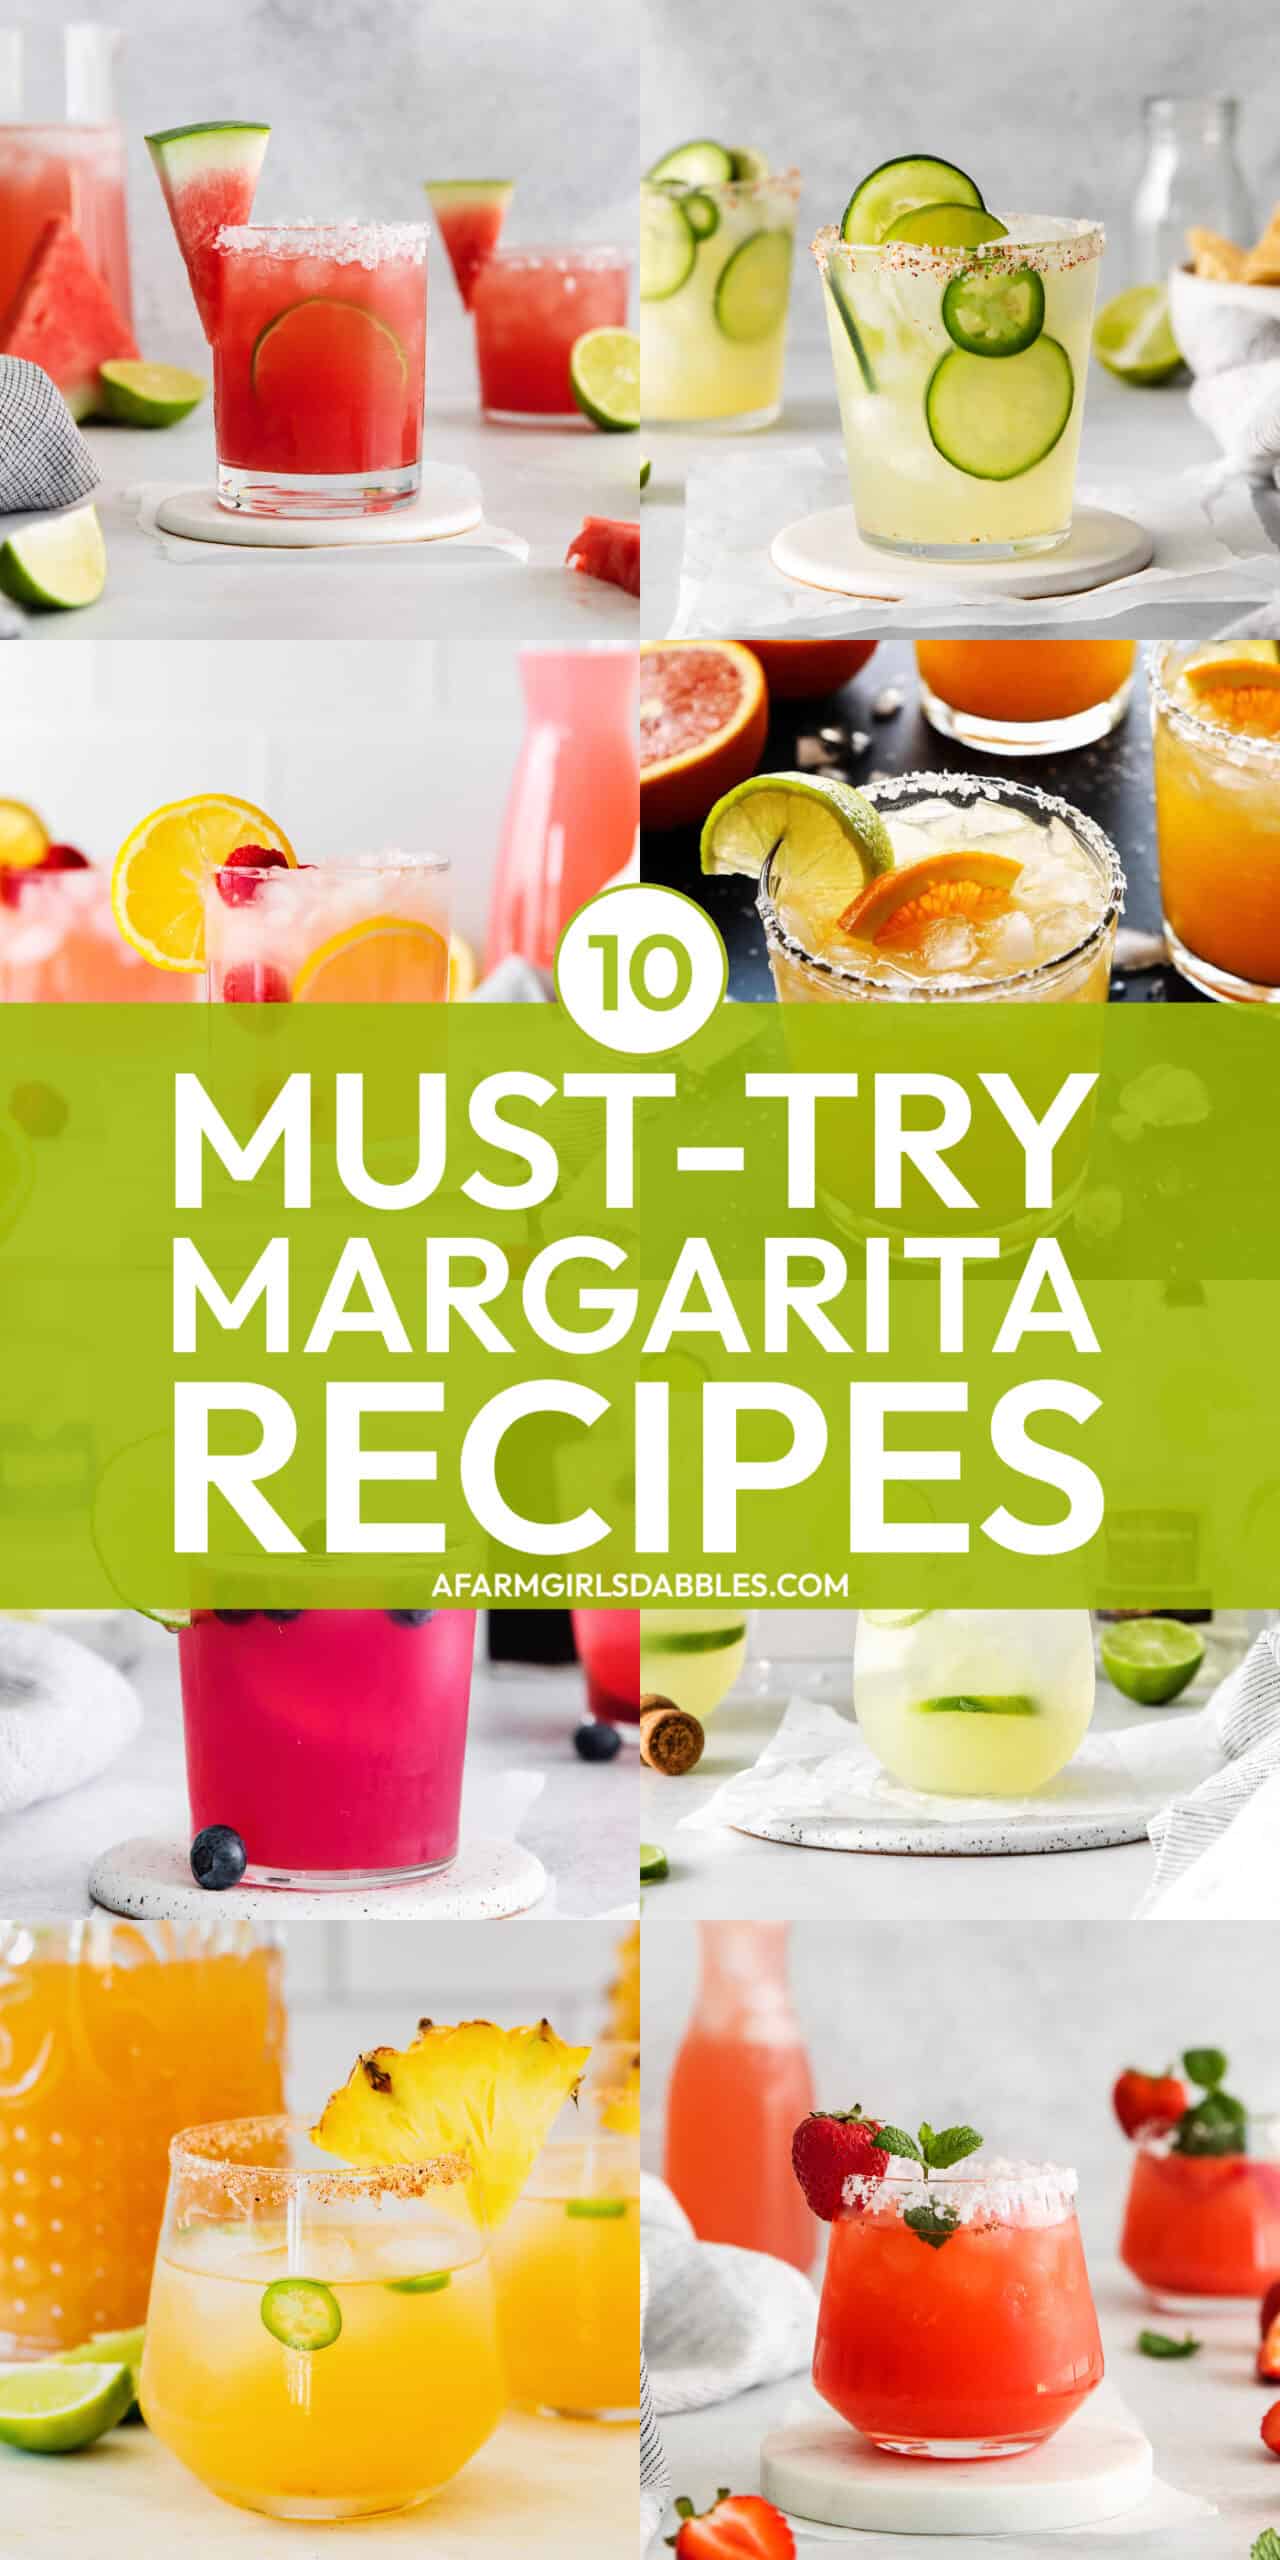 Pinterest image for 10 must-try margarita recipes